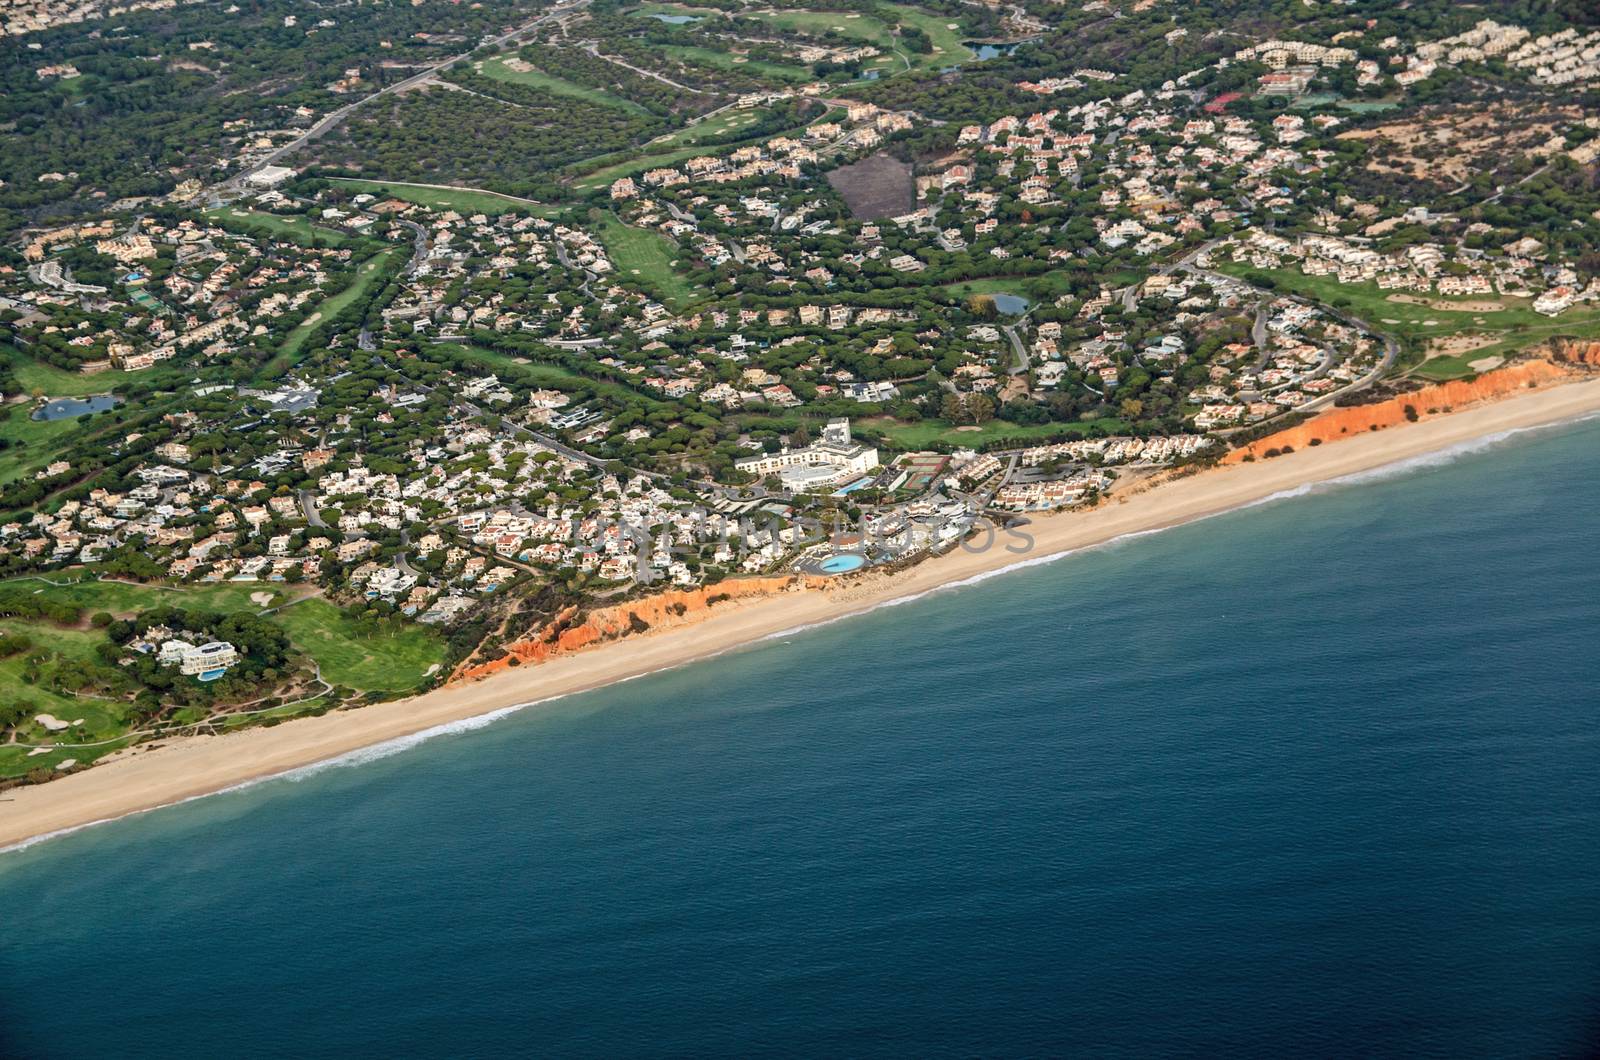 Dona Filipa Hotel, Algarve Coast - Aerial View by BasPhoto